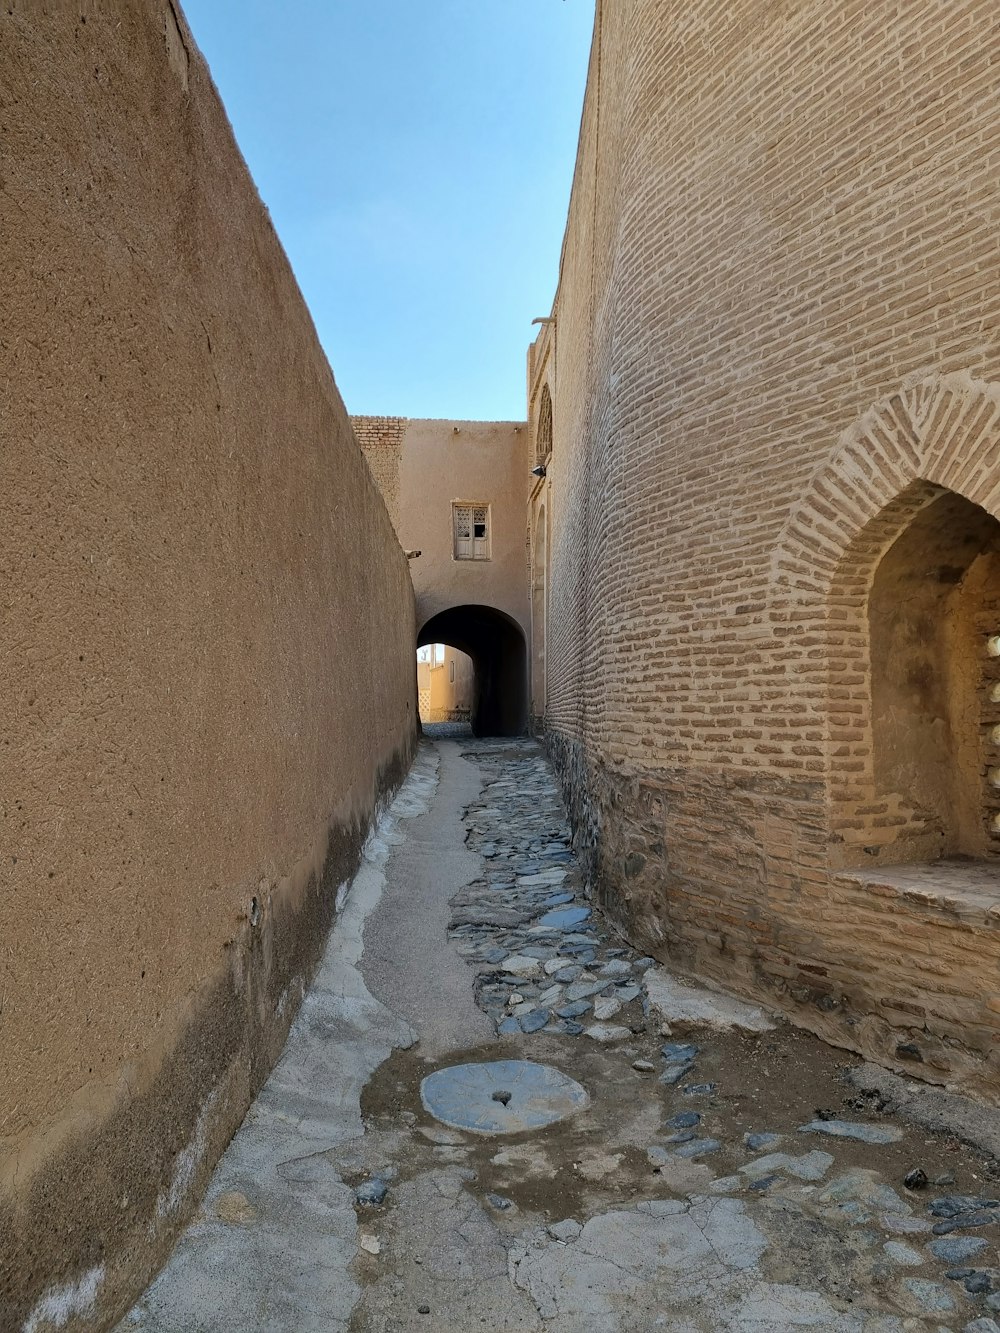 a narrow alley between two brick buildings